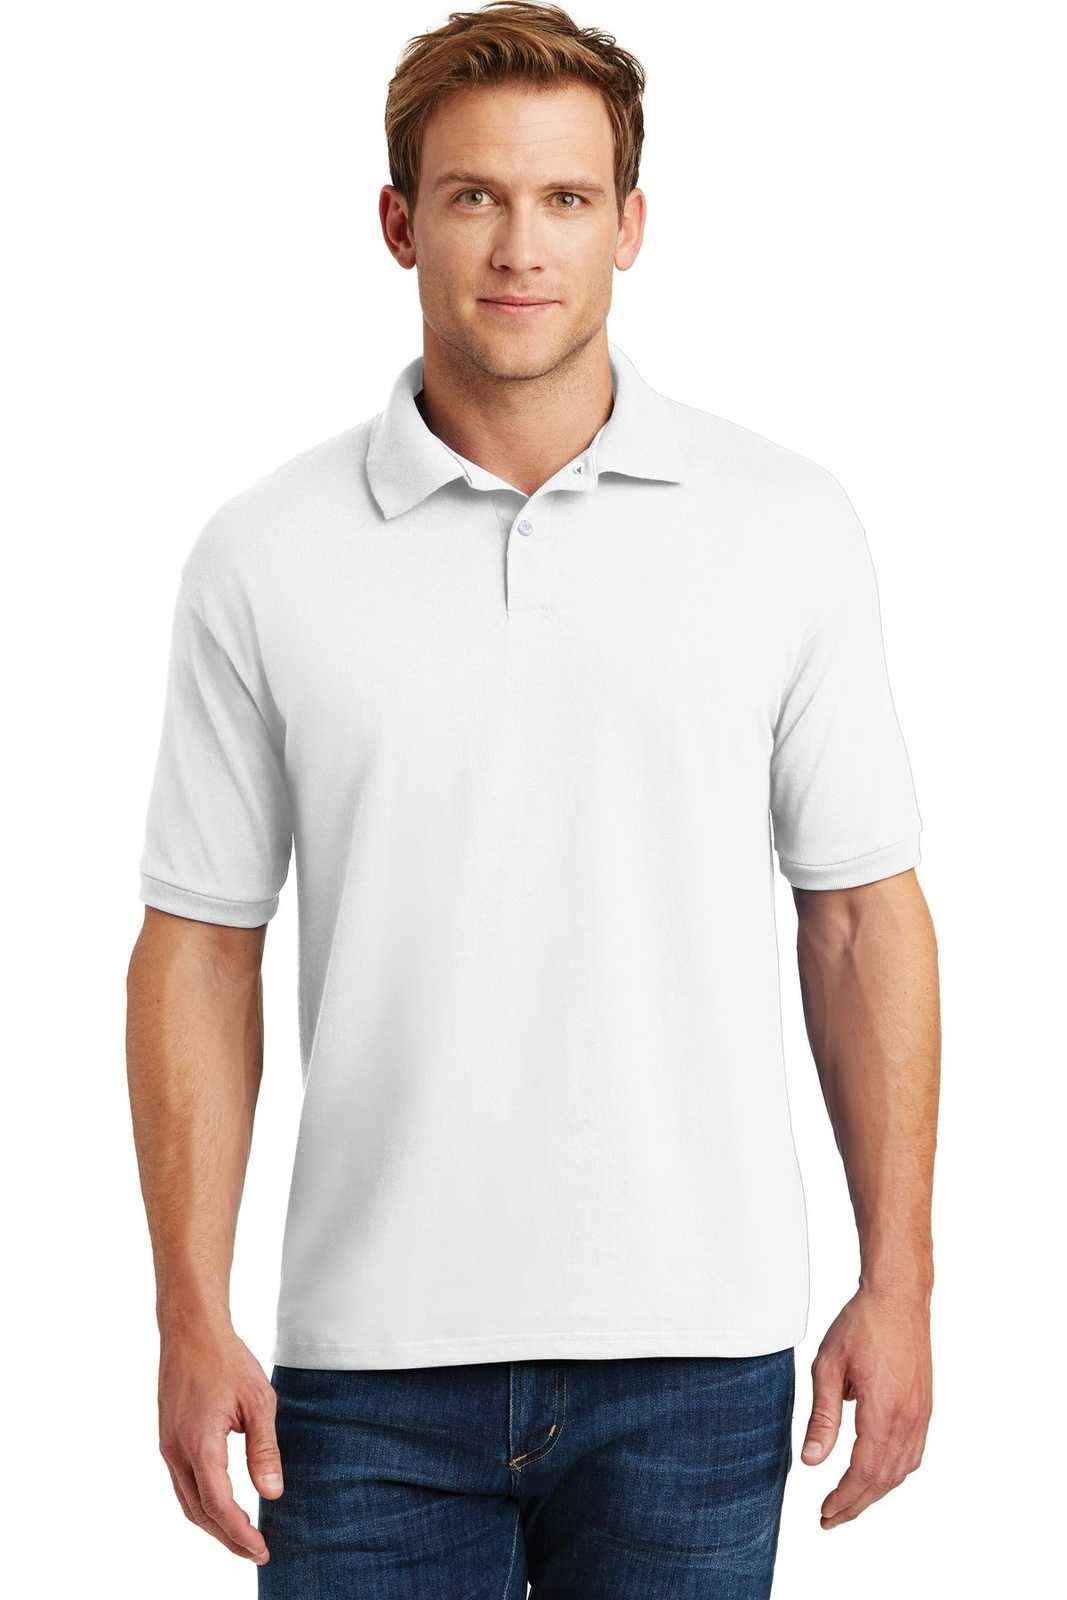 Hanes 054X Ecosmart 5.2-Ounce Jersey Knit Sport Shirt - White - HIT a Double